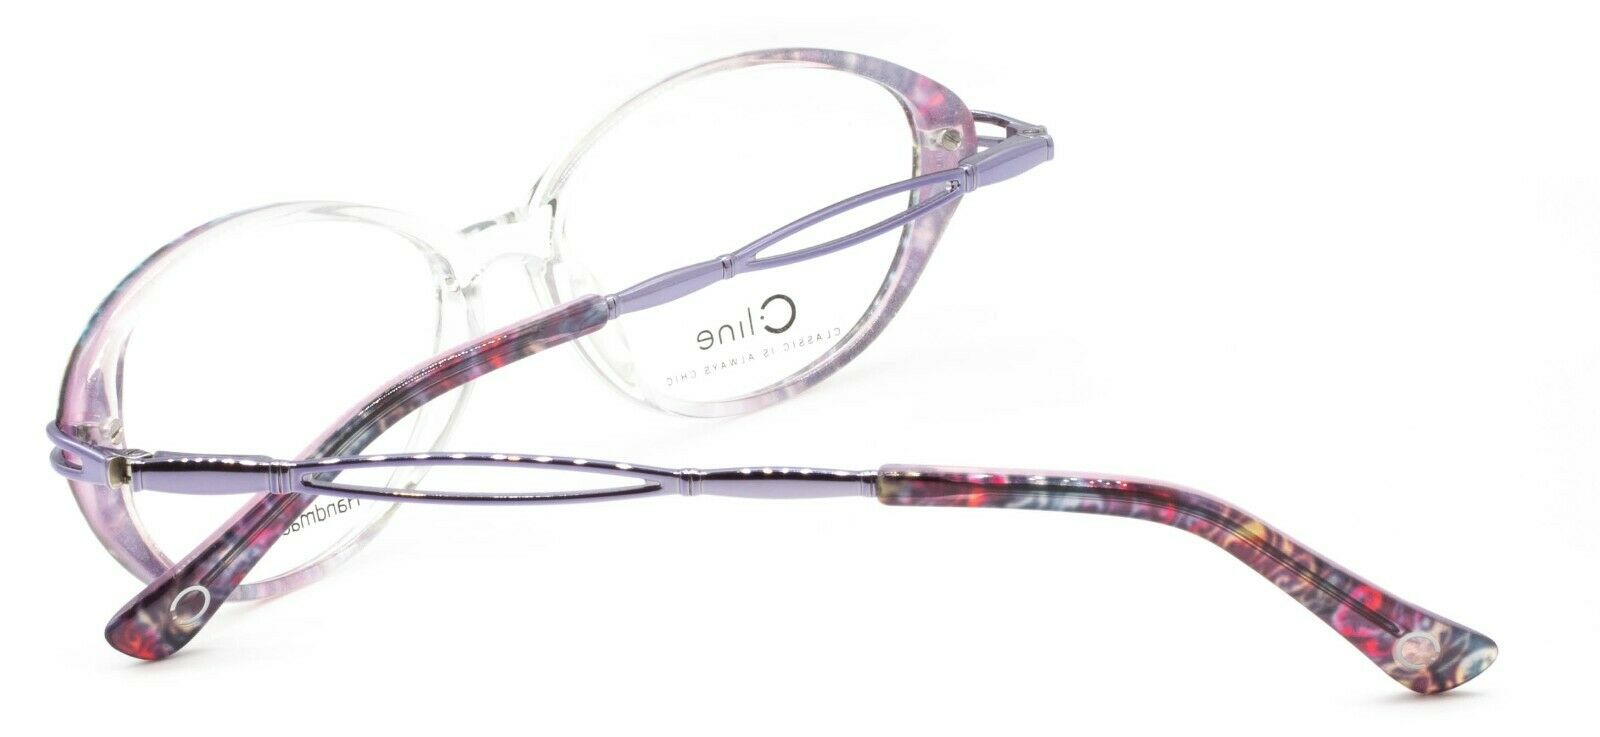 C-Line CLCF23 XG 53mm Titanium Eyewear FRAMES Glasses RX Optical Eyeglasses New